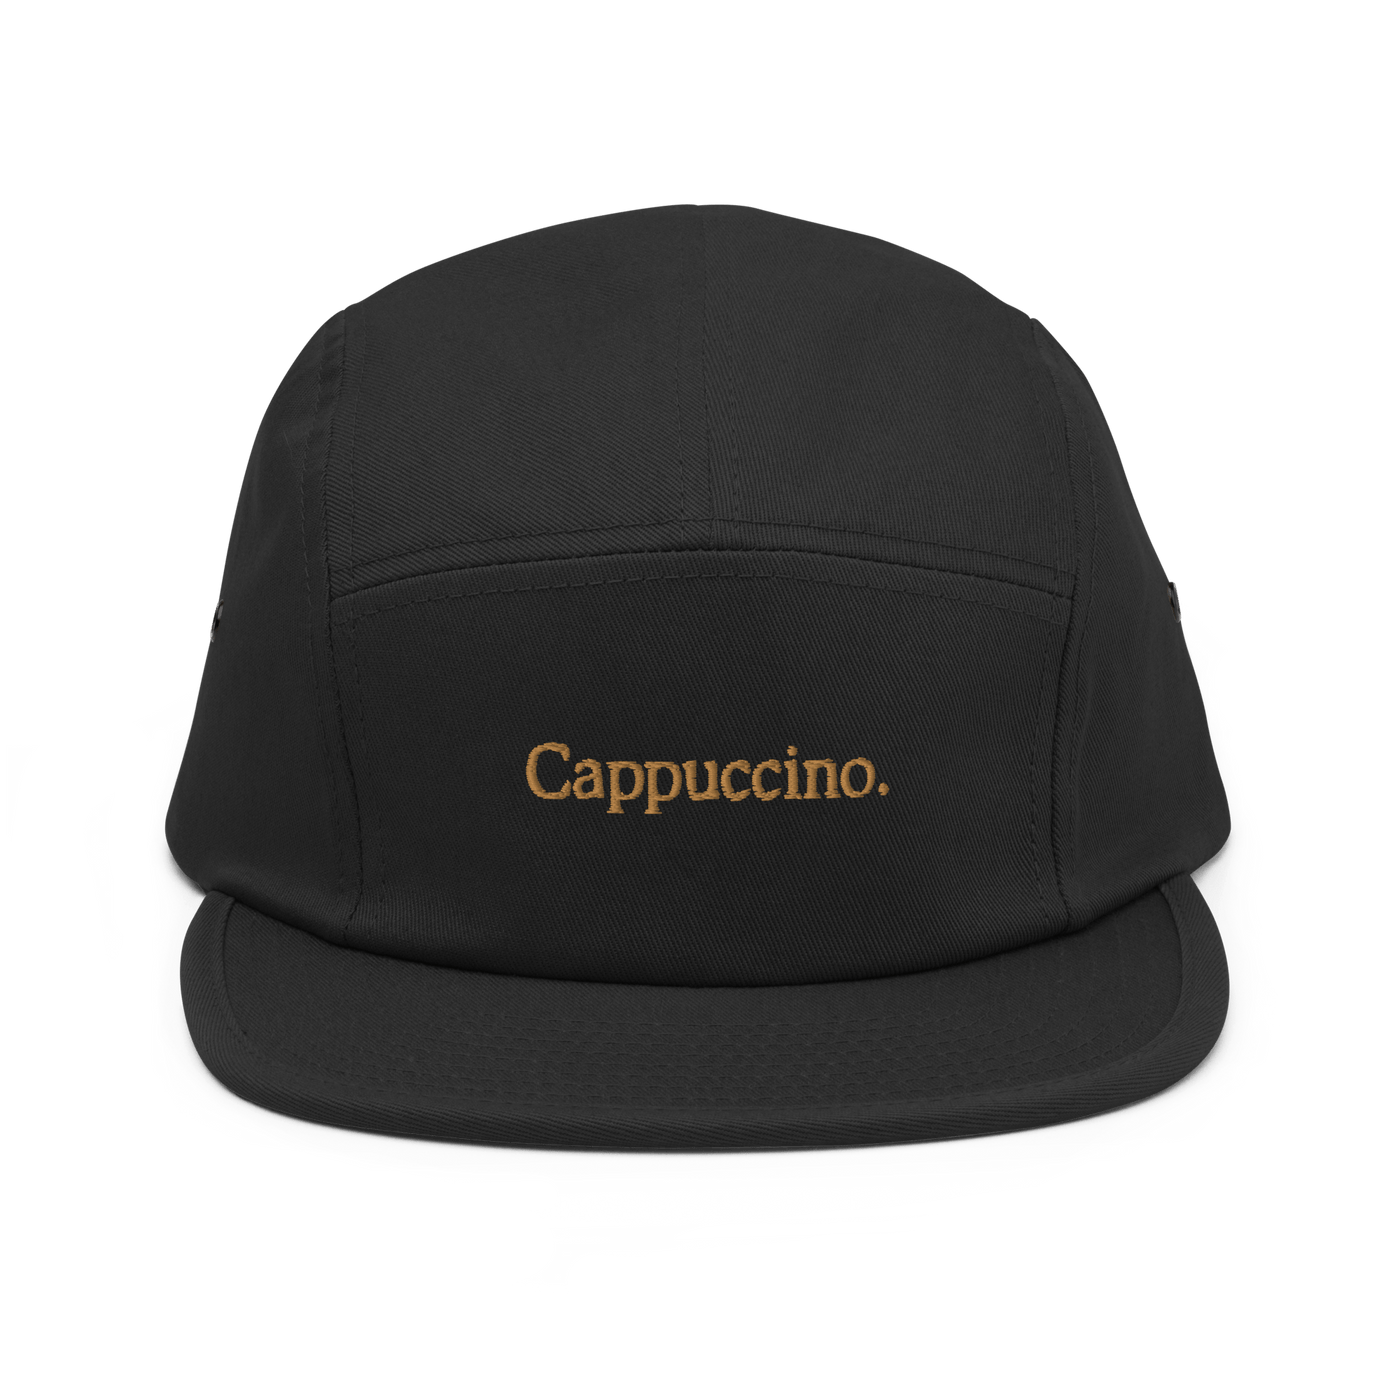 Cappuccino Five Panel Cap - Black - - Just Another Cap Store